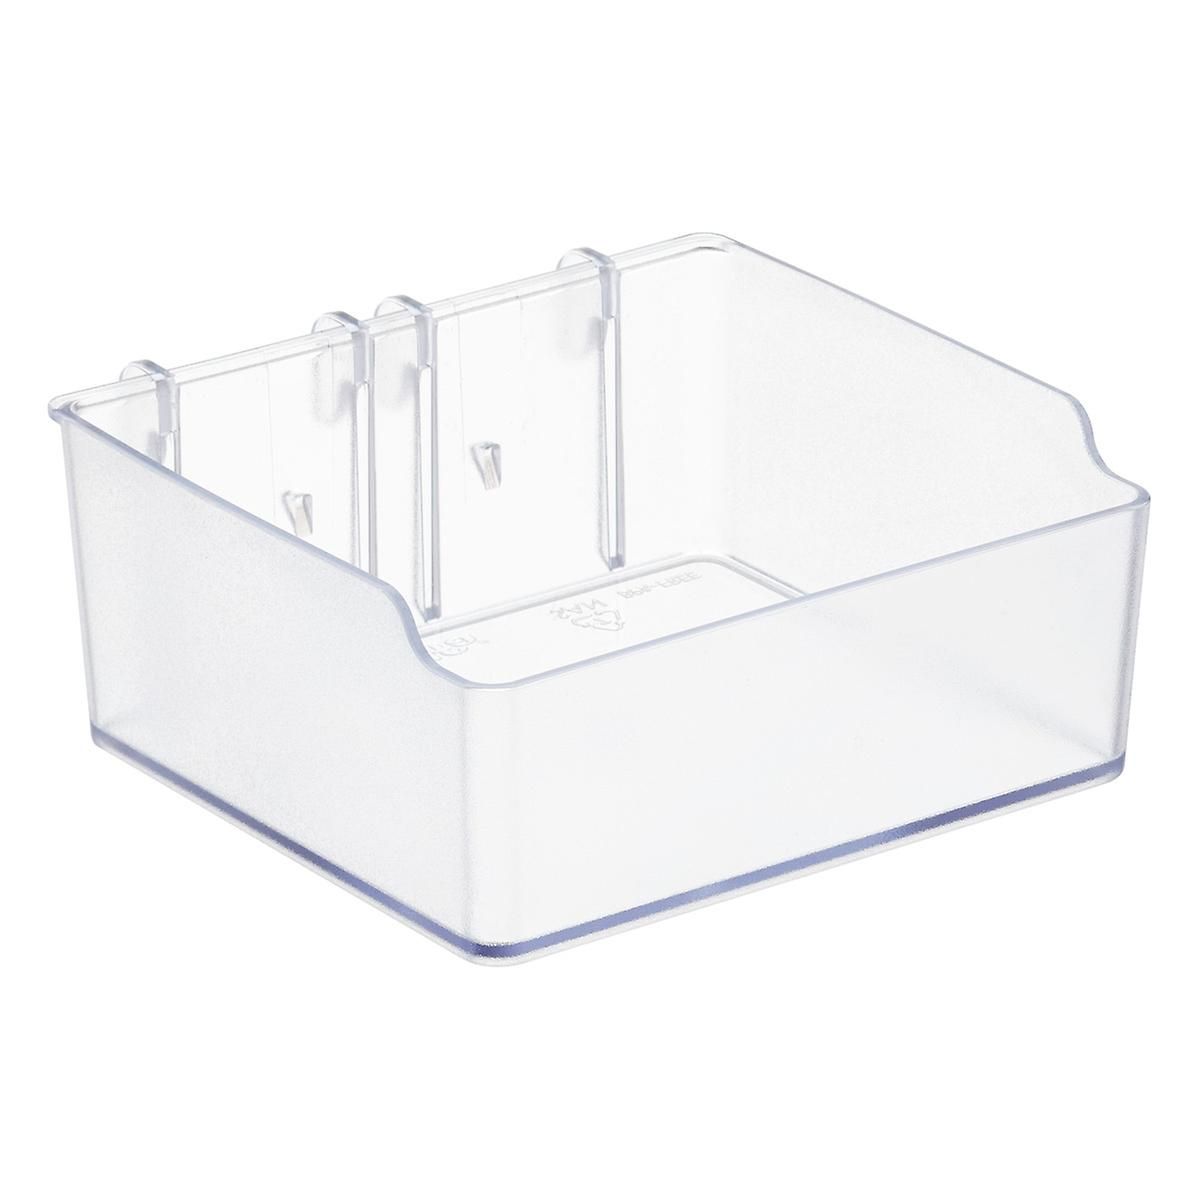 Elfa Utility Narrow Board Box Translucent | The Container Store